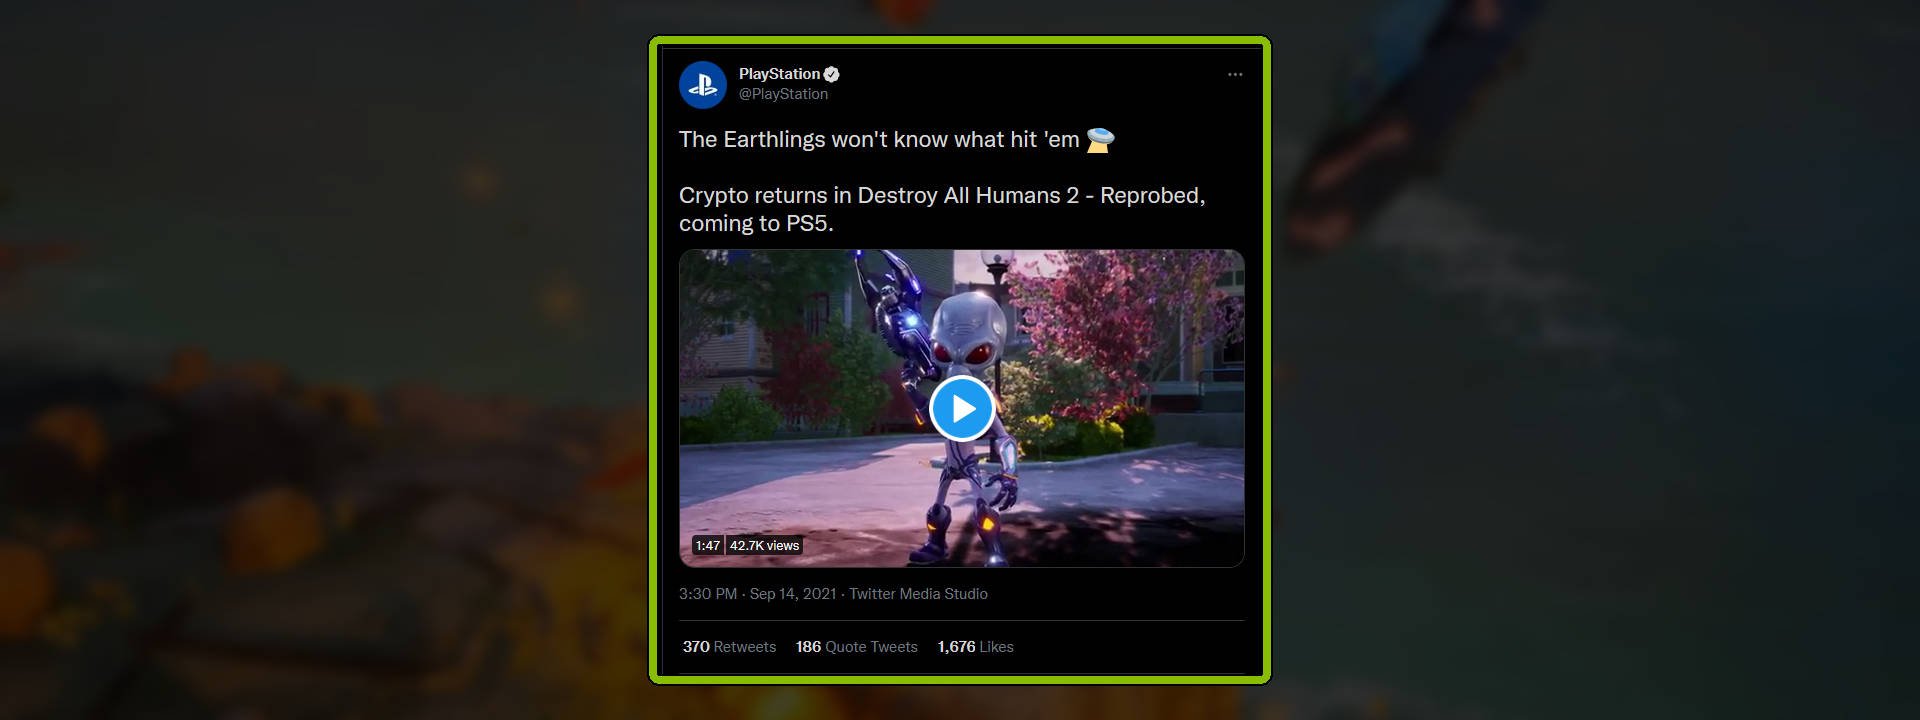 Destroy All Humans 2 - Reprobed PS5 leak tweet